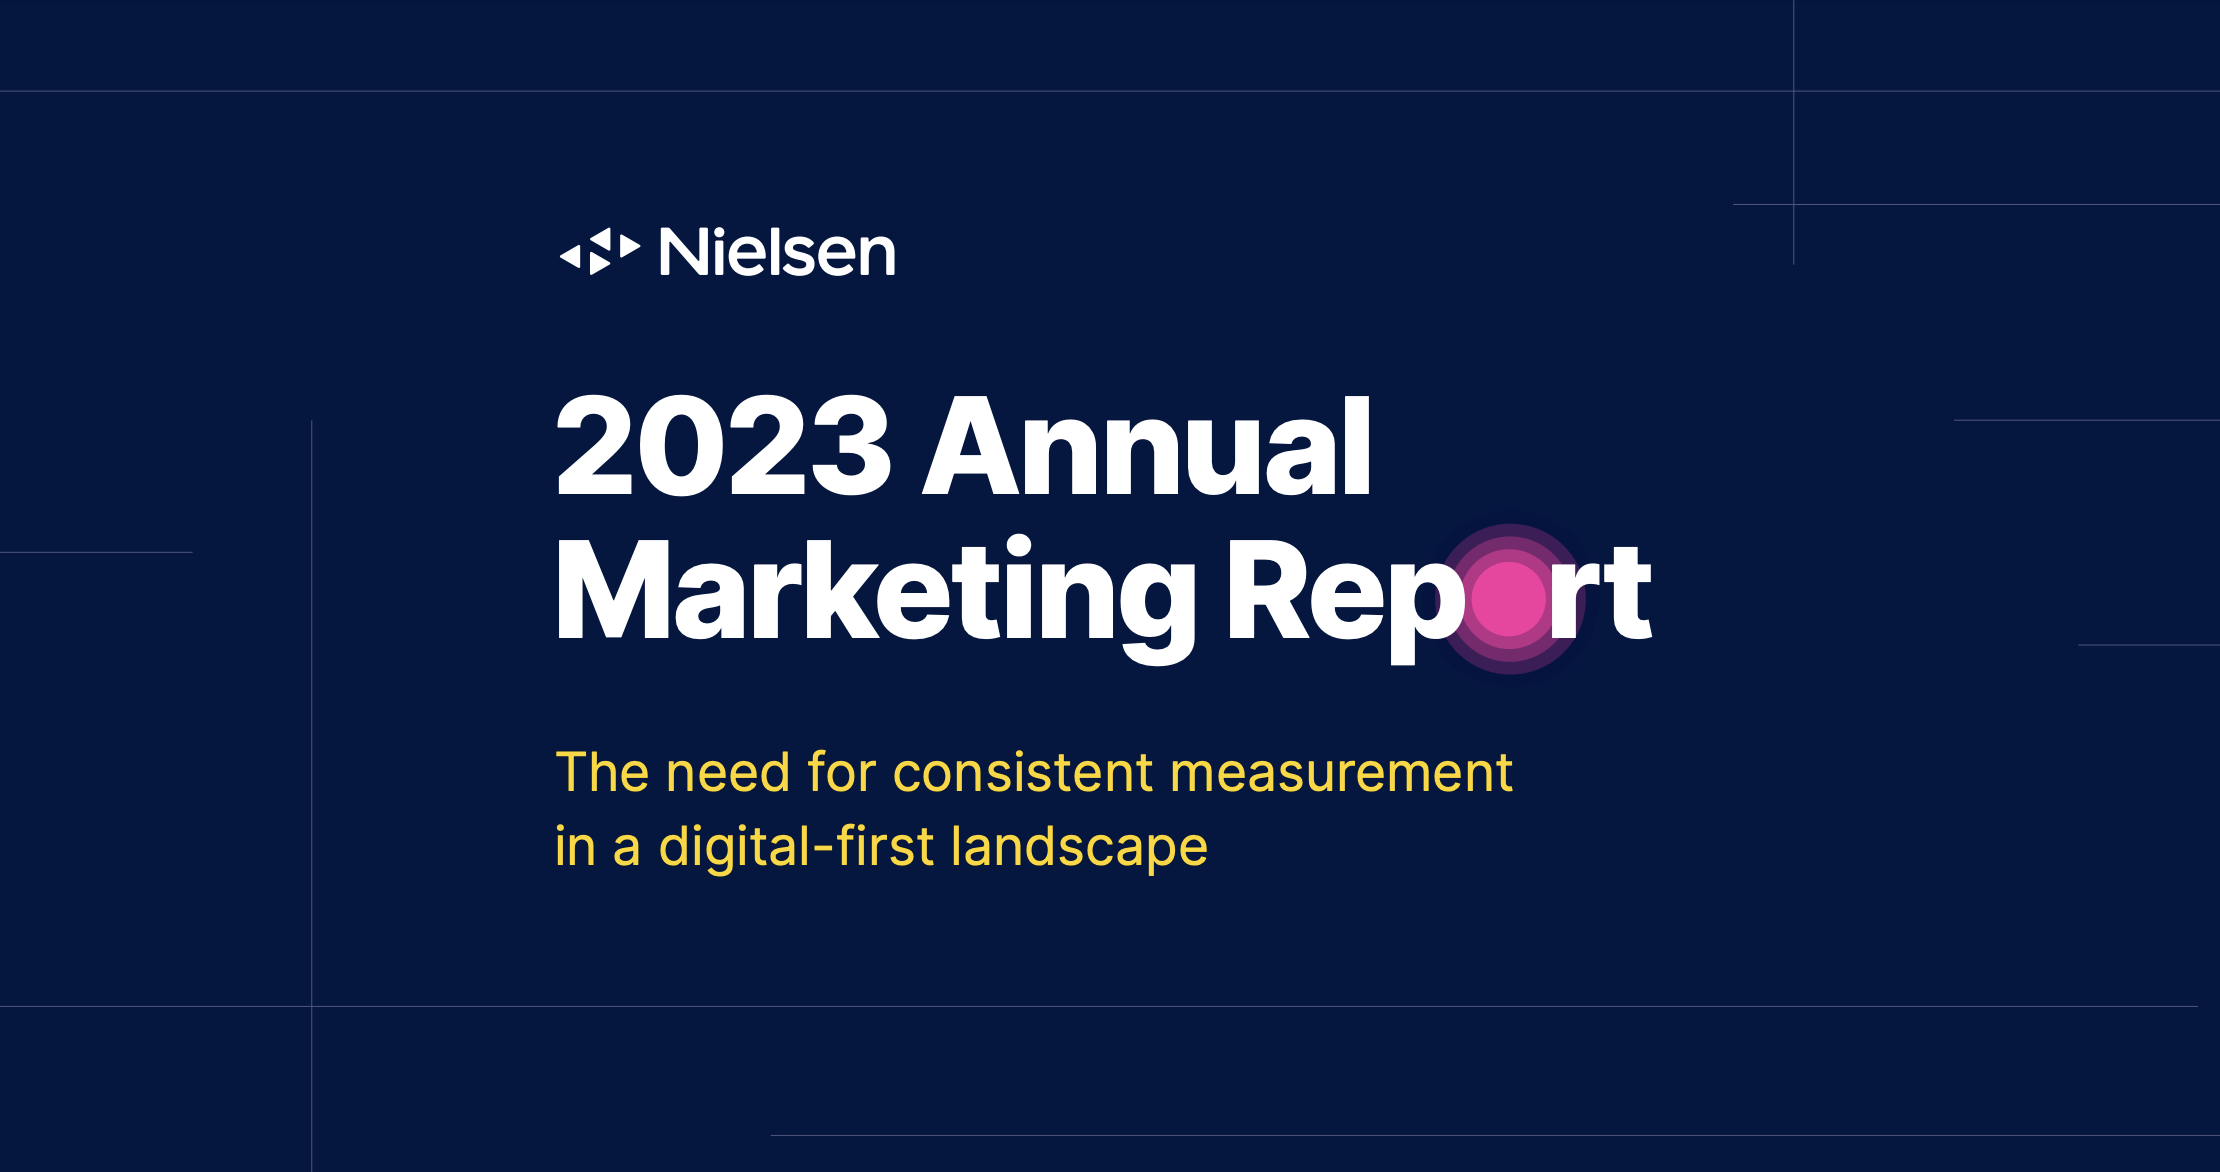  2023 Nielsen Annual Marketing Report